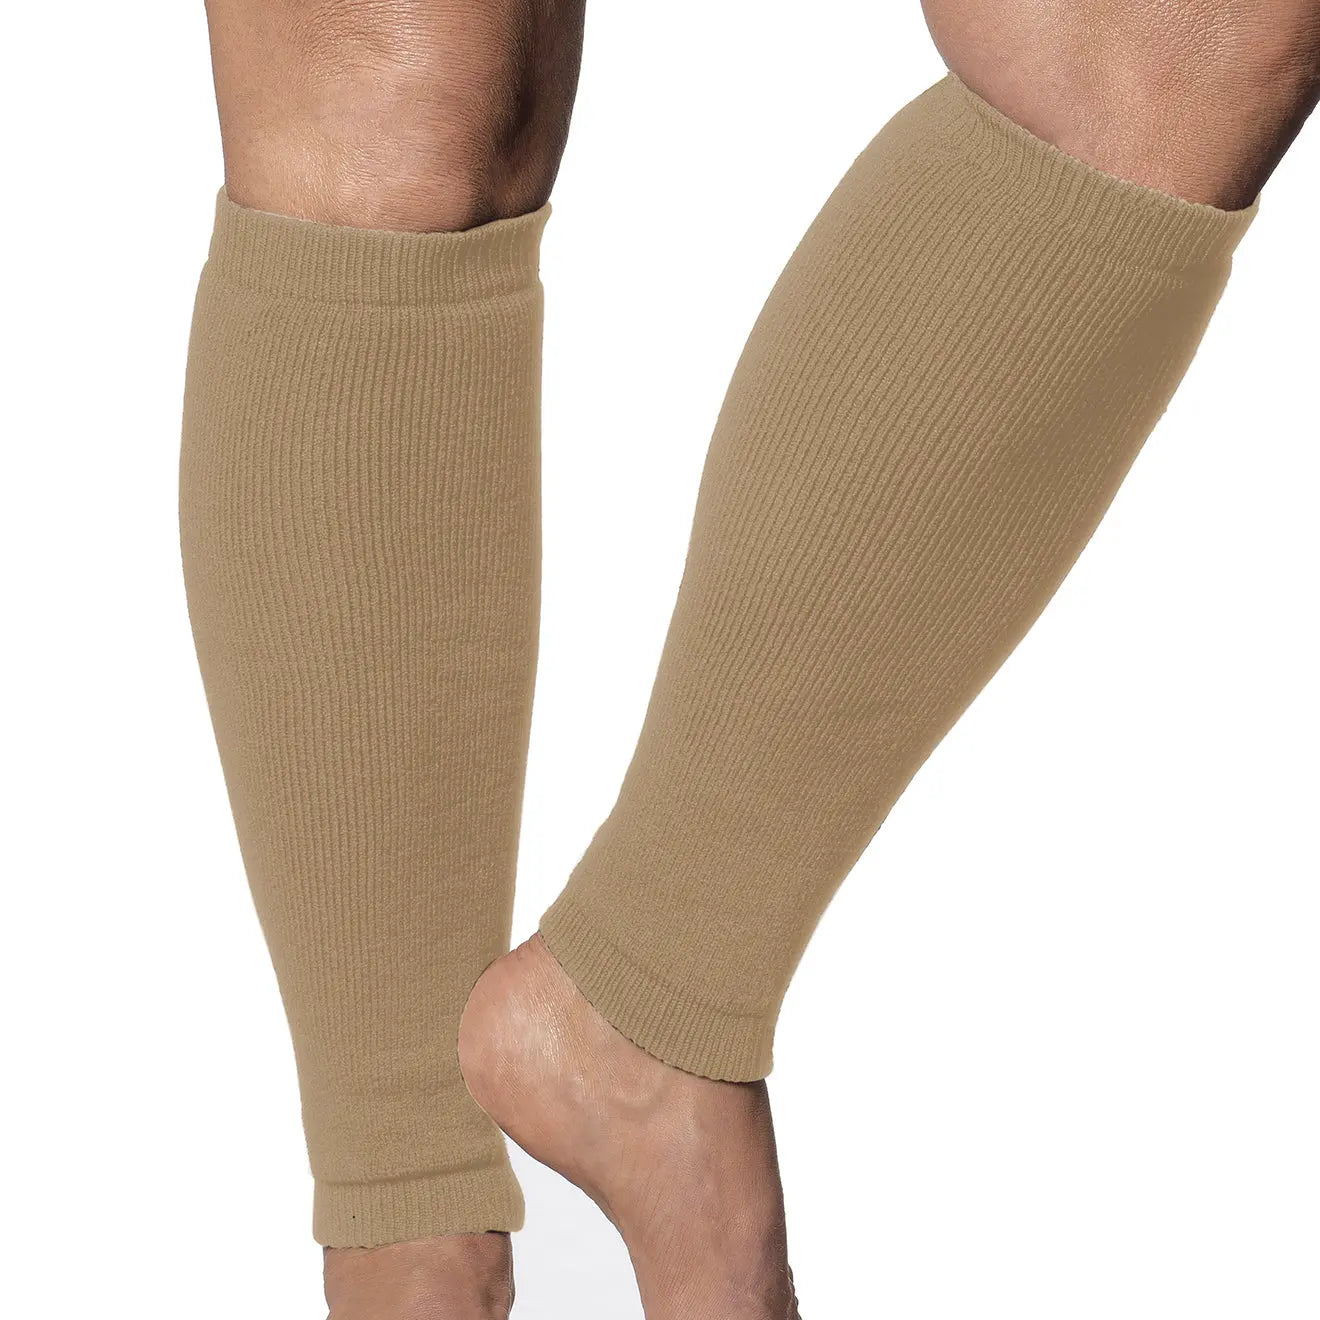 Leg Sleeves - Light Weight. Frail Skin Protectors. Khaki